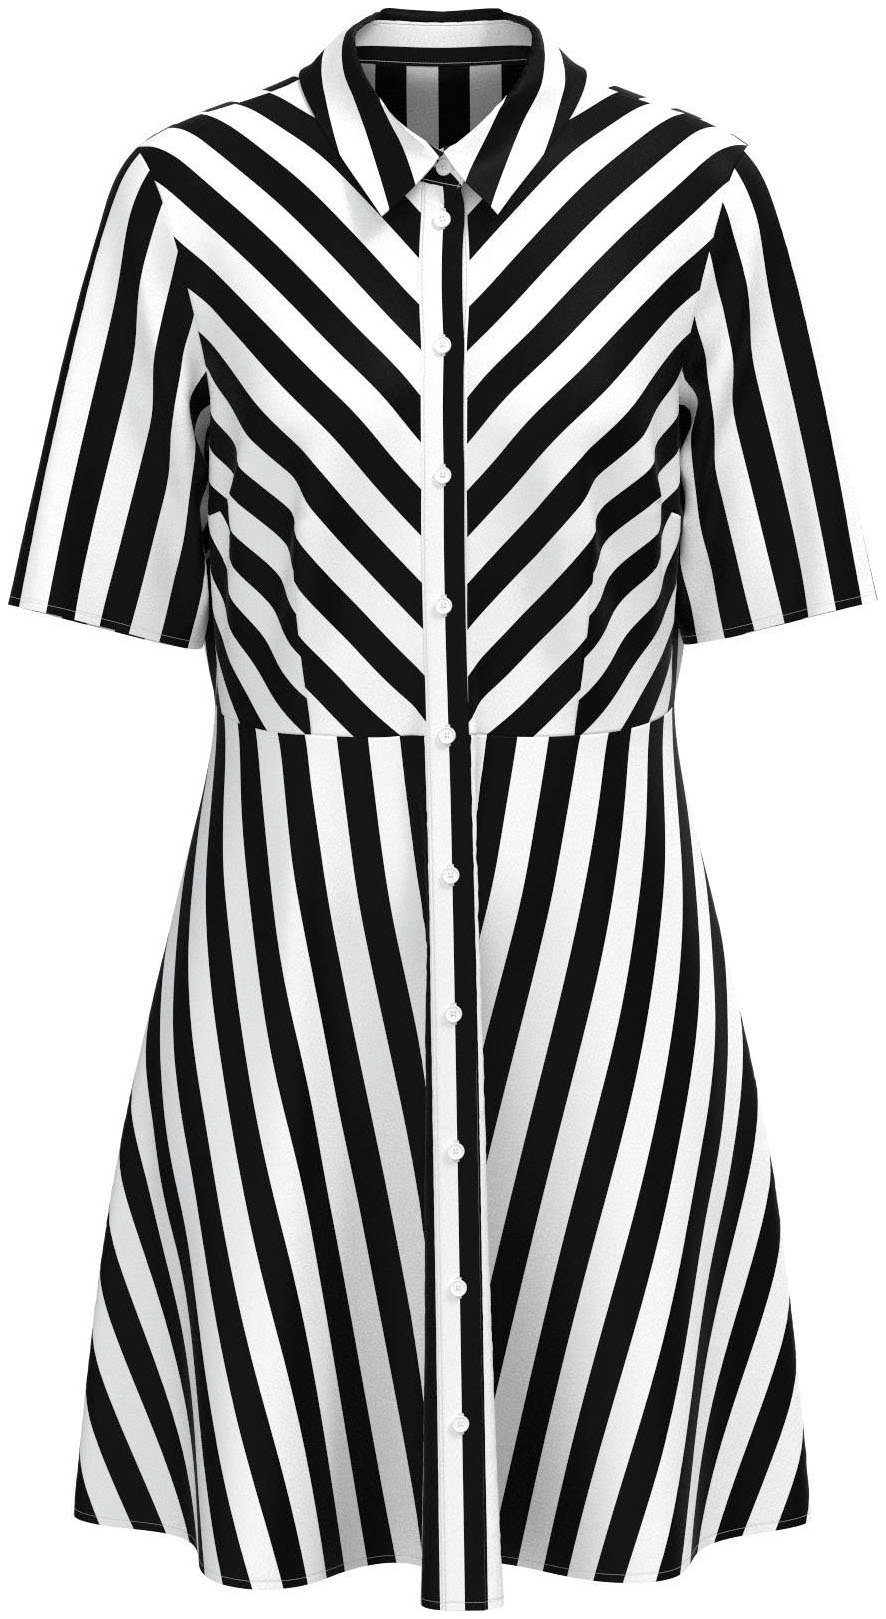 SHIRT YASSAVANNA DRESS Y.A.S Hemdblusenkleid NOOS S. 2/4 Stripes:WHITE Black